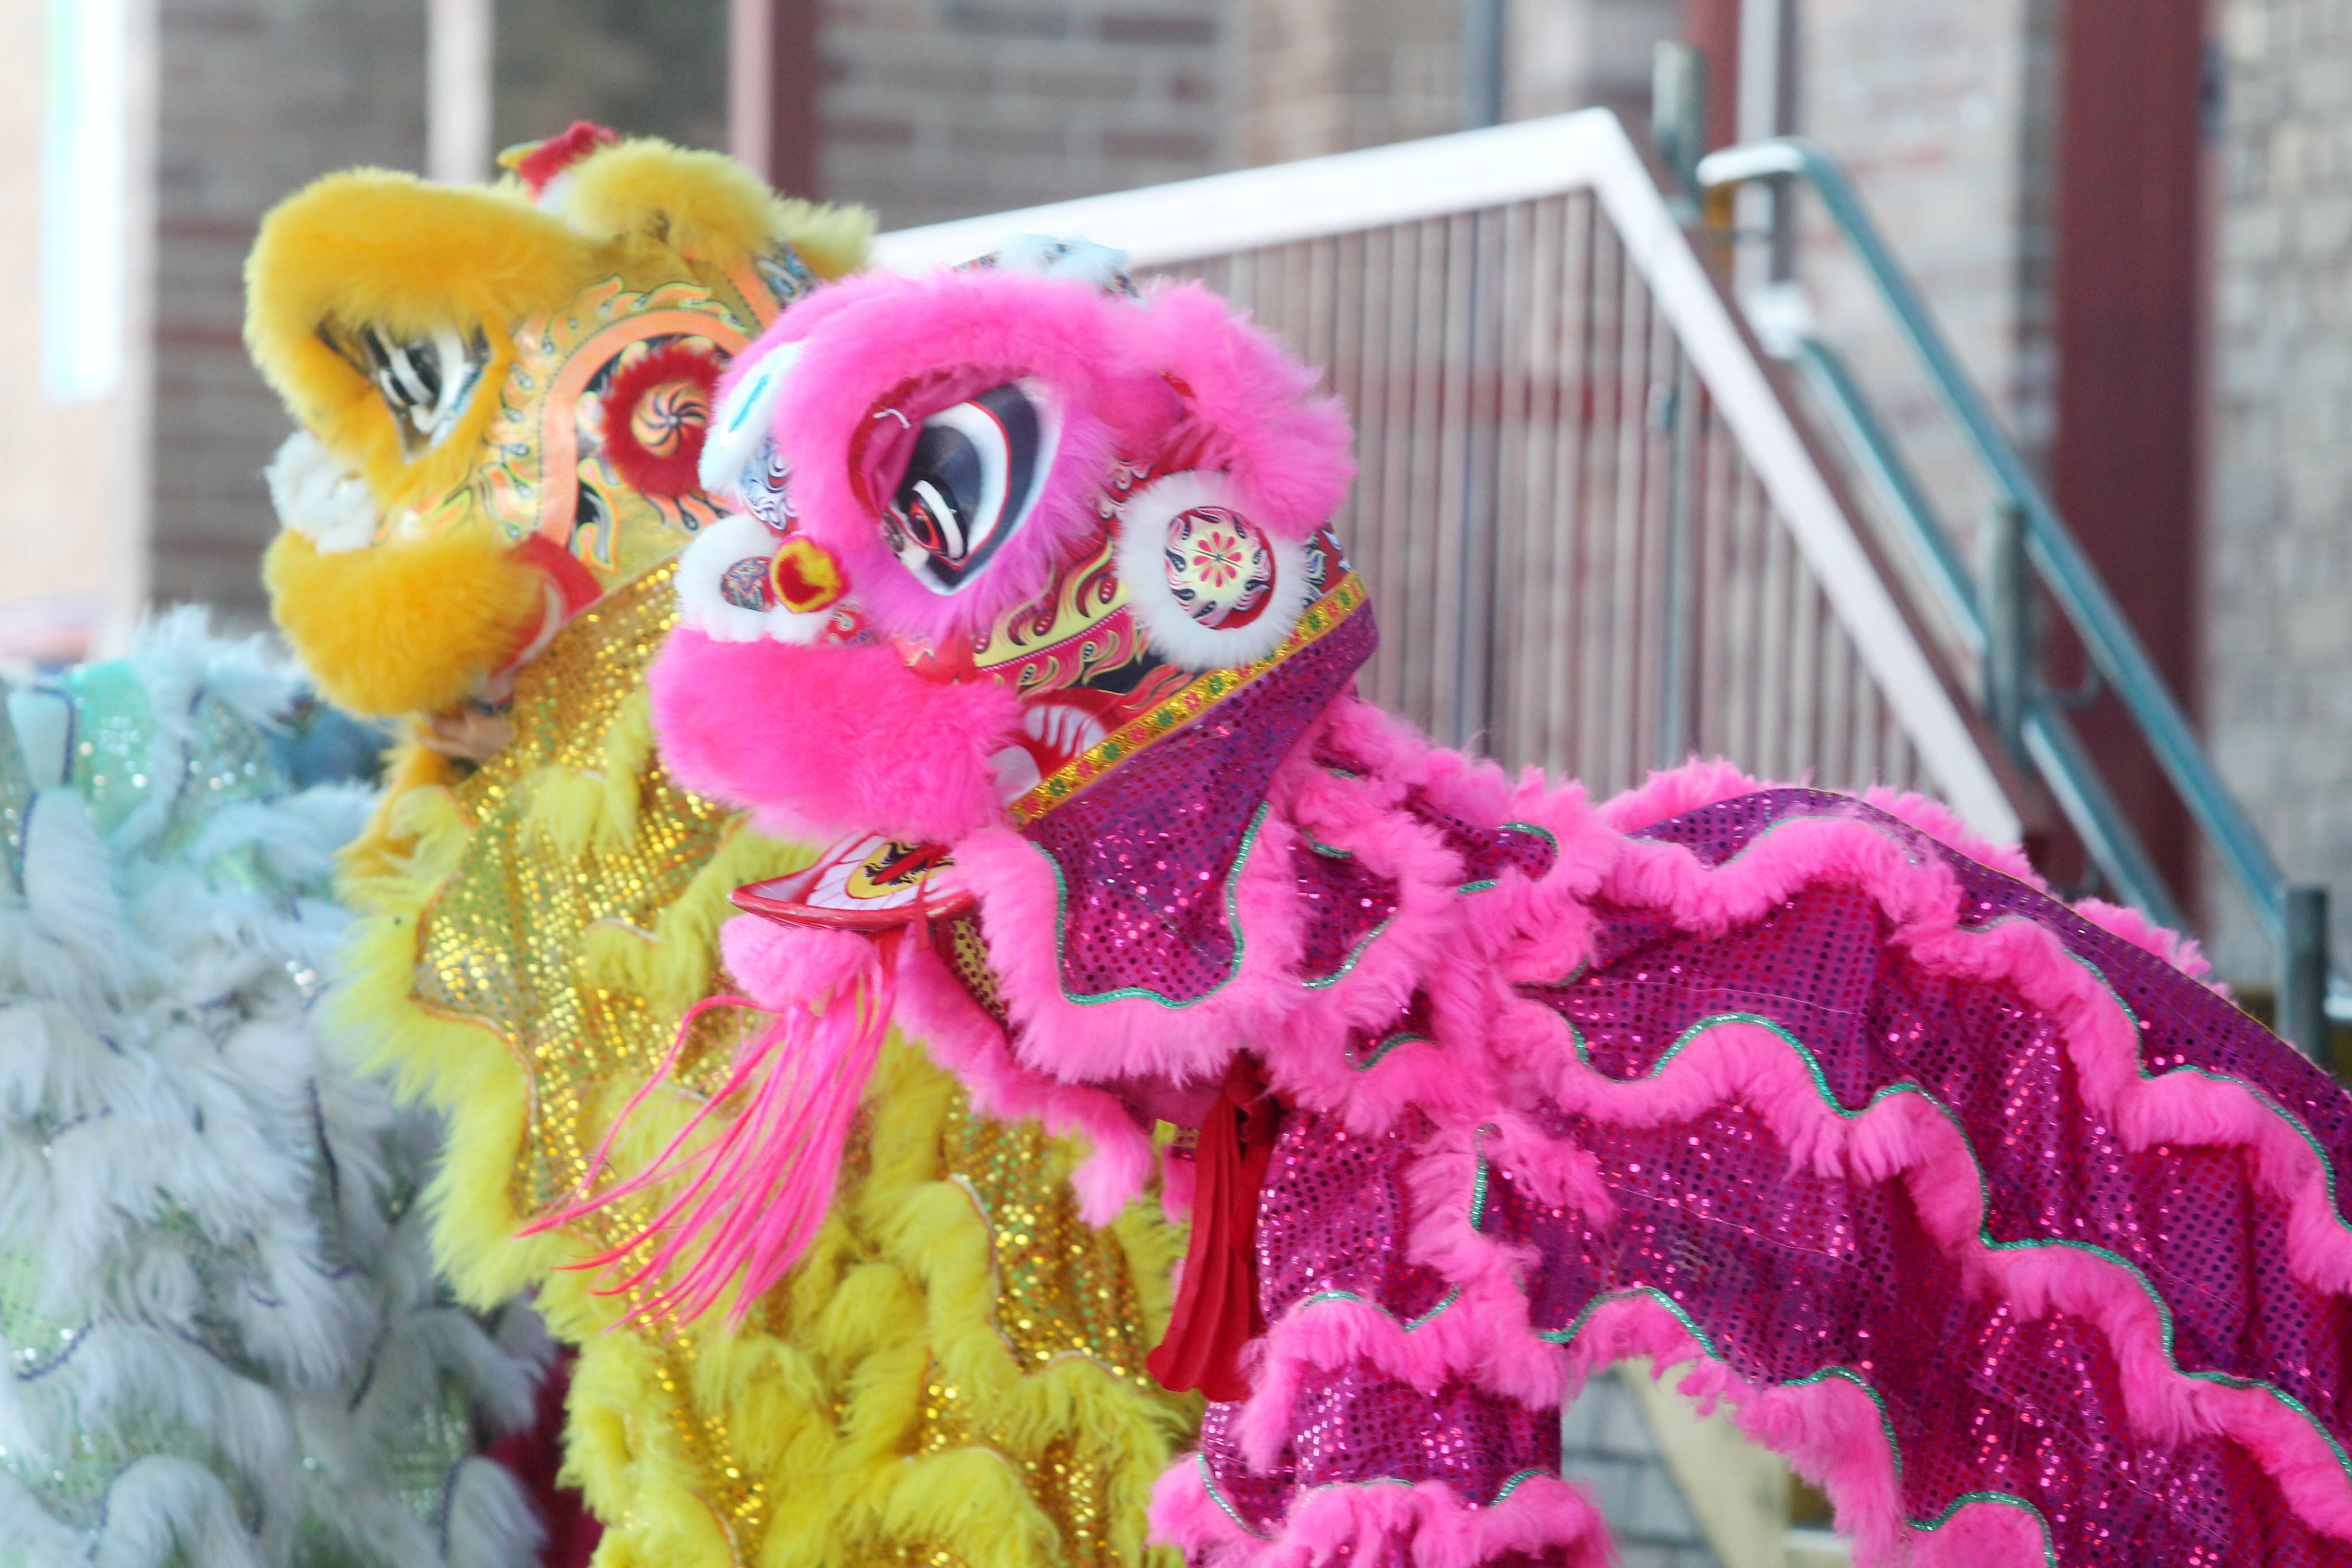 Annual Pink Bra Hoorah roars through Guntersville Saturday, News